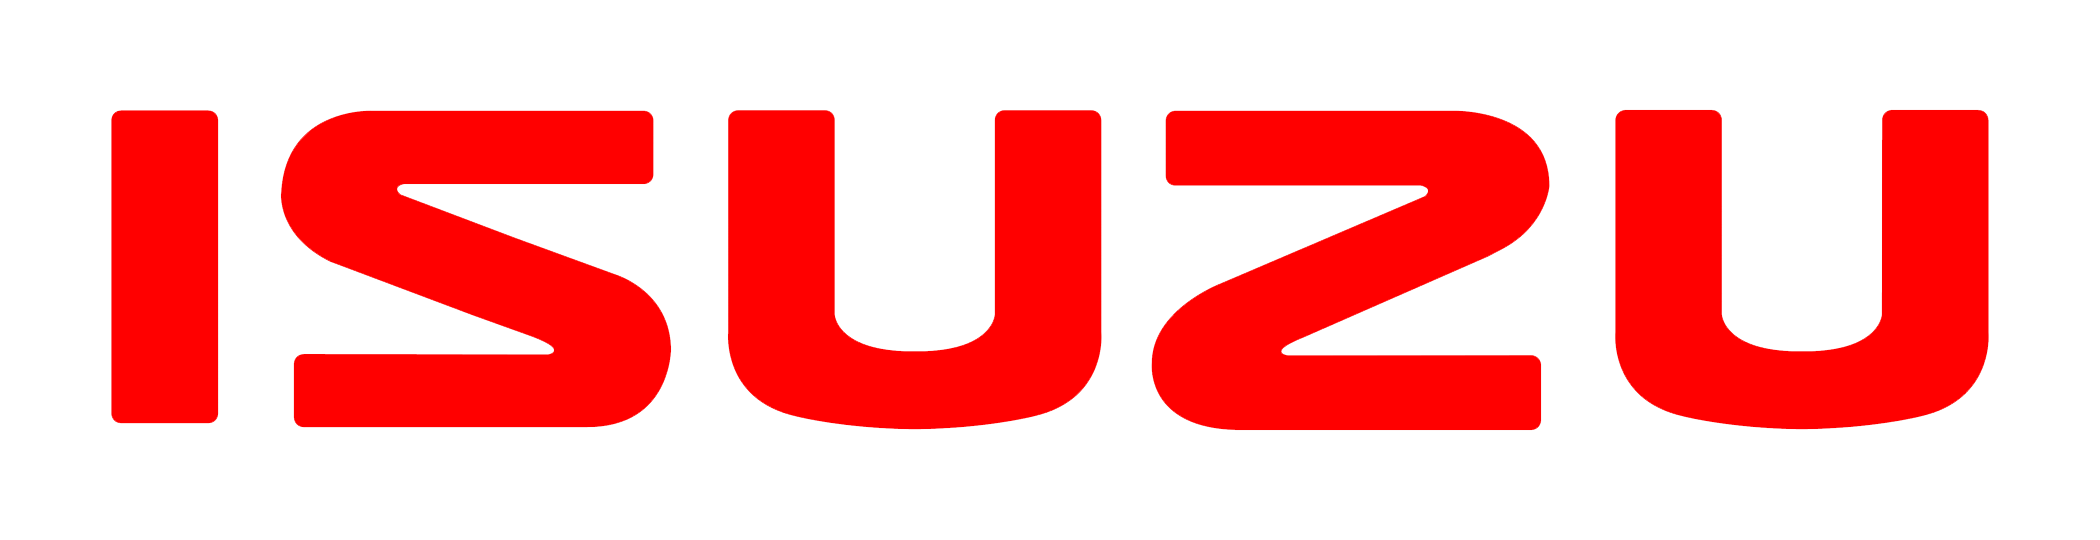 Isuzu-Logo.png